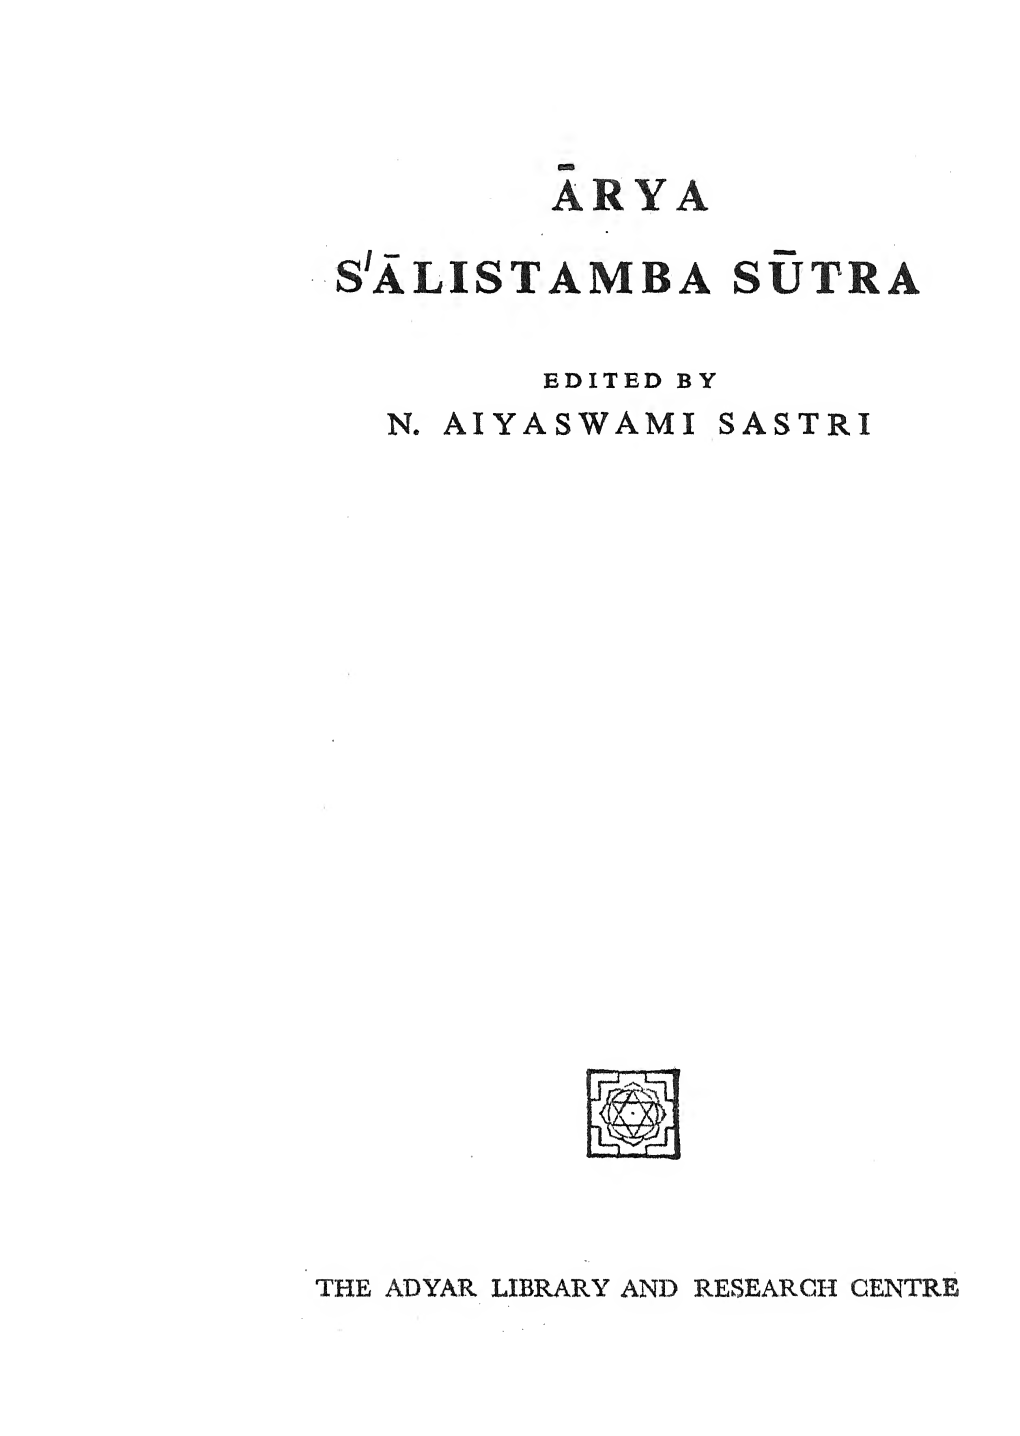 Arya Salistamba Sutra